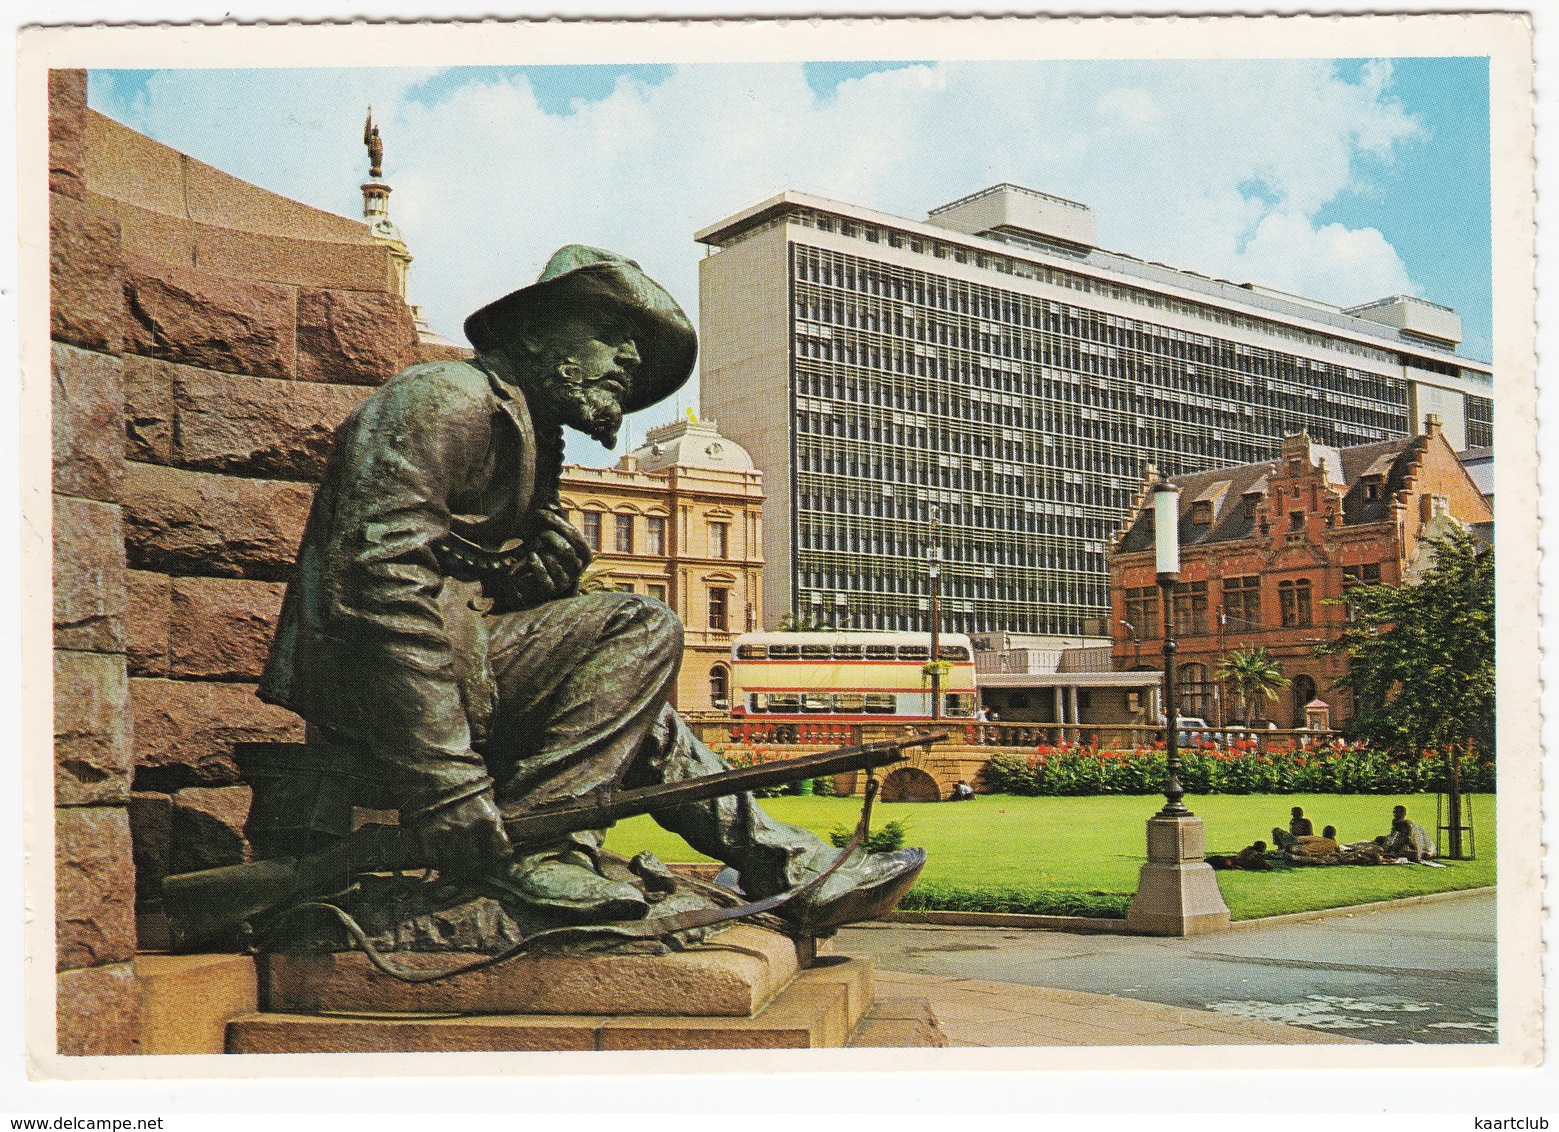 Pretoria: DOUBLE DECK BUS - Church Square - Paul Kruger Monument (bronze) - (South Africa) - Südafrika